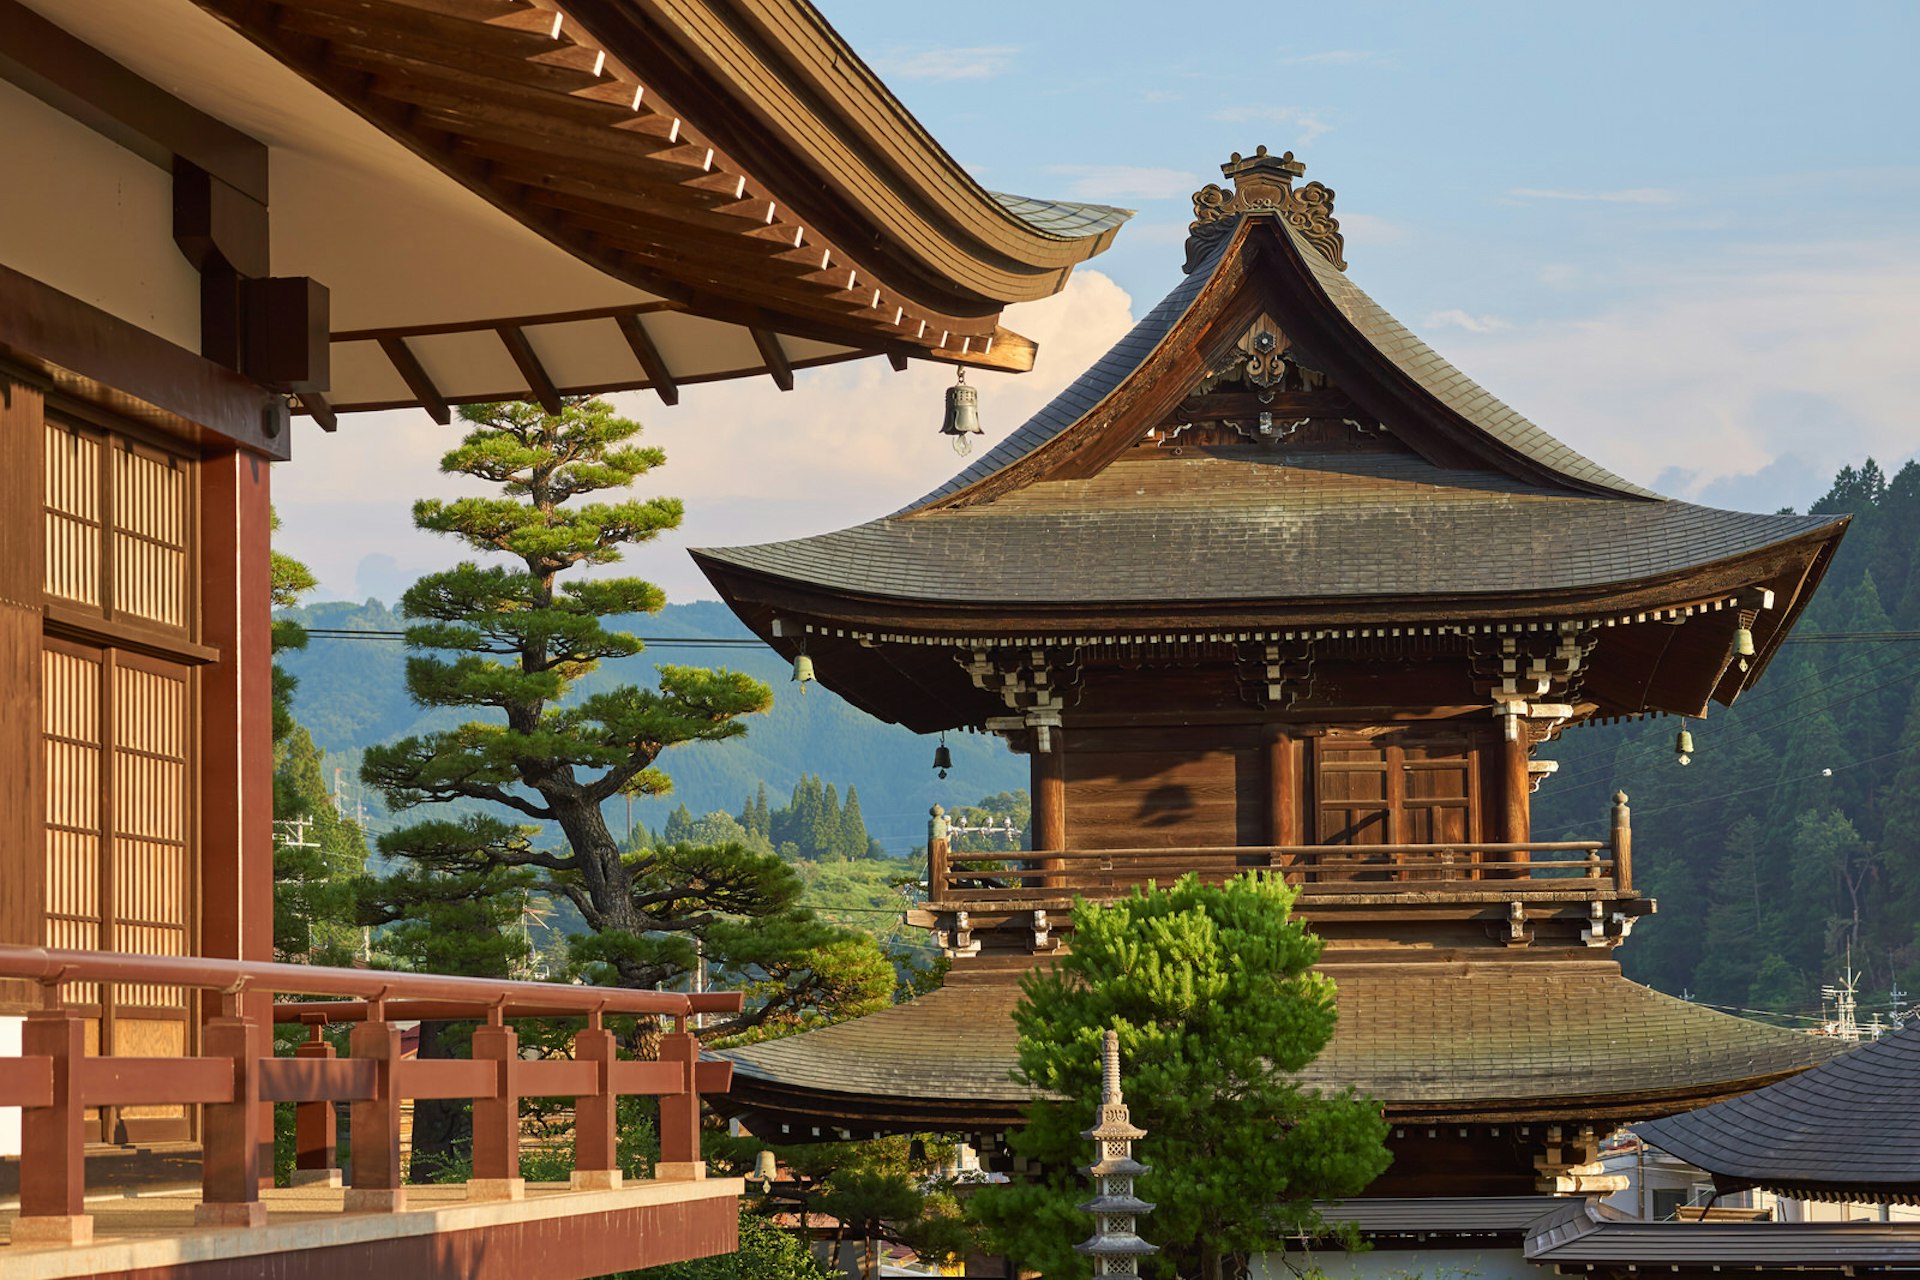 Traditional wooden buildings in Takayama, Japan © Urban Napflin / Shutterstock